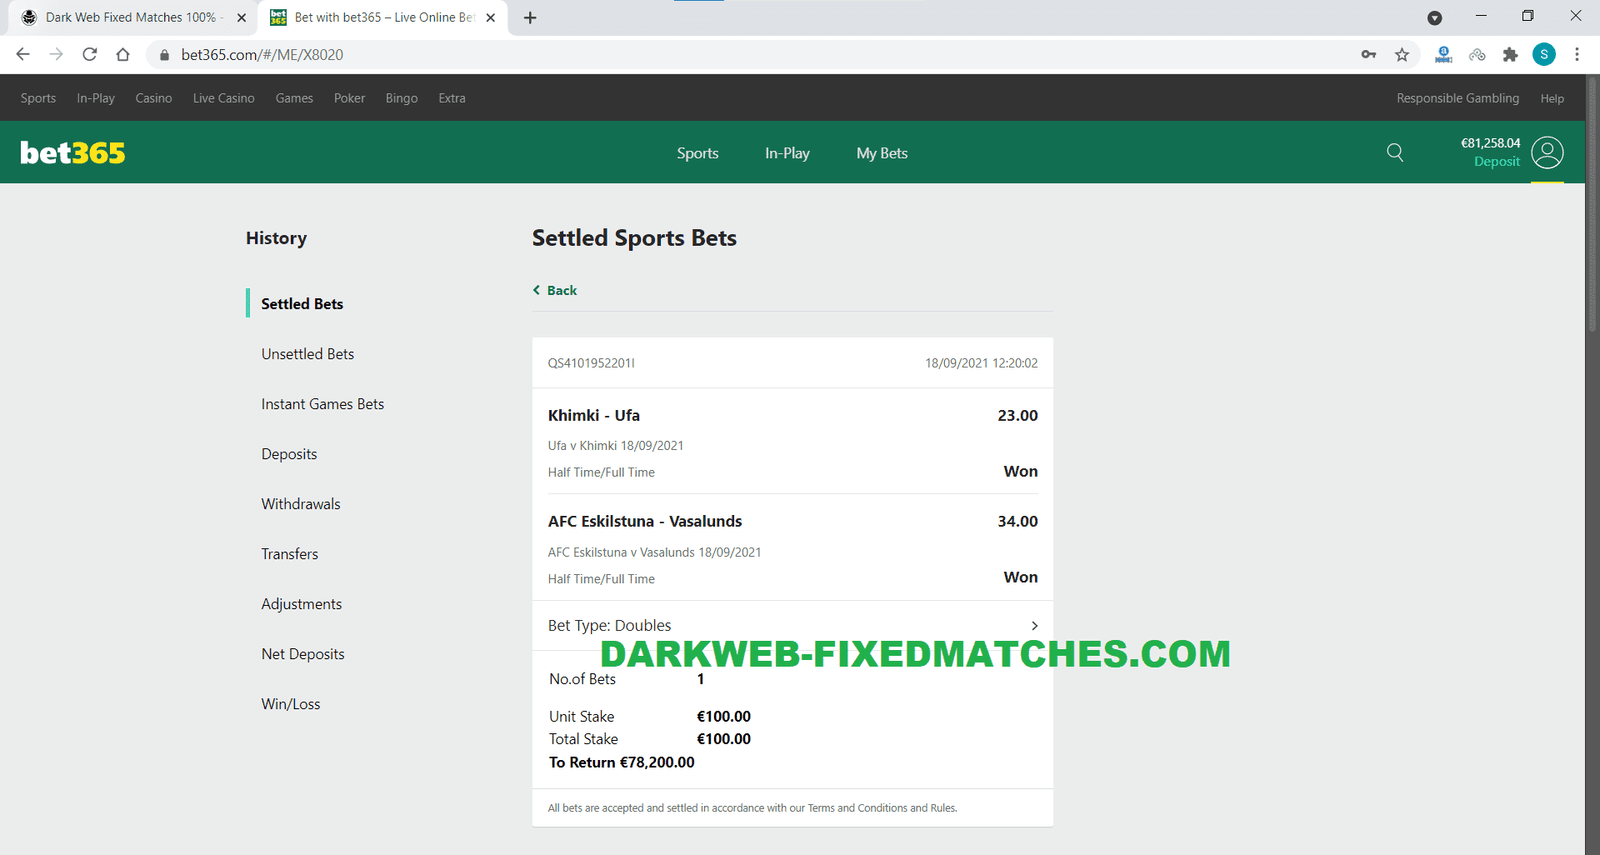 dark web fixed matches won 18 09